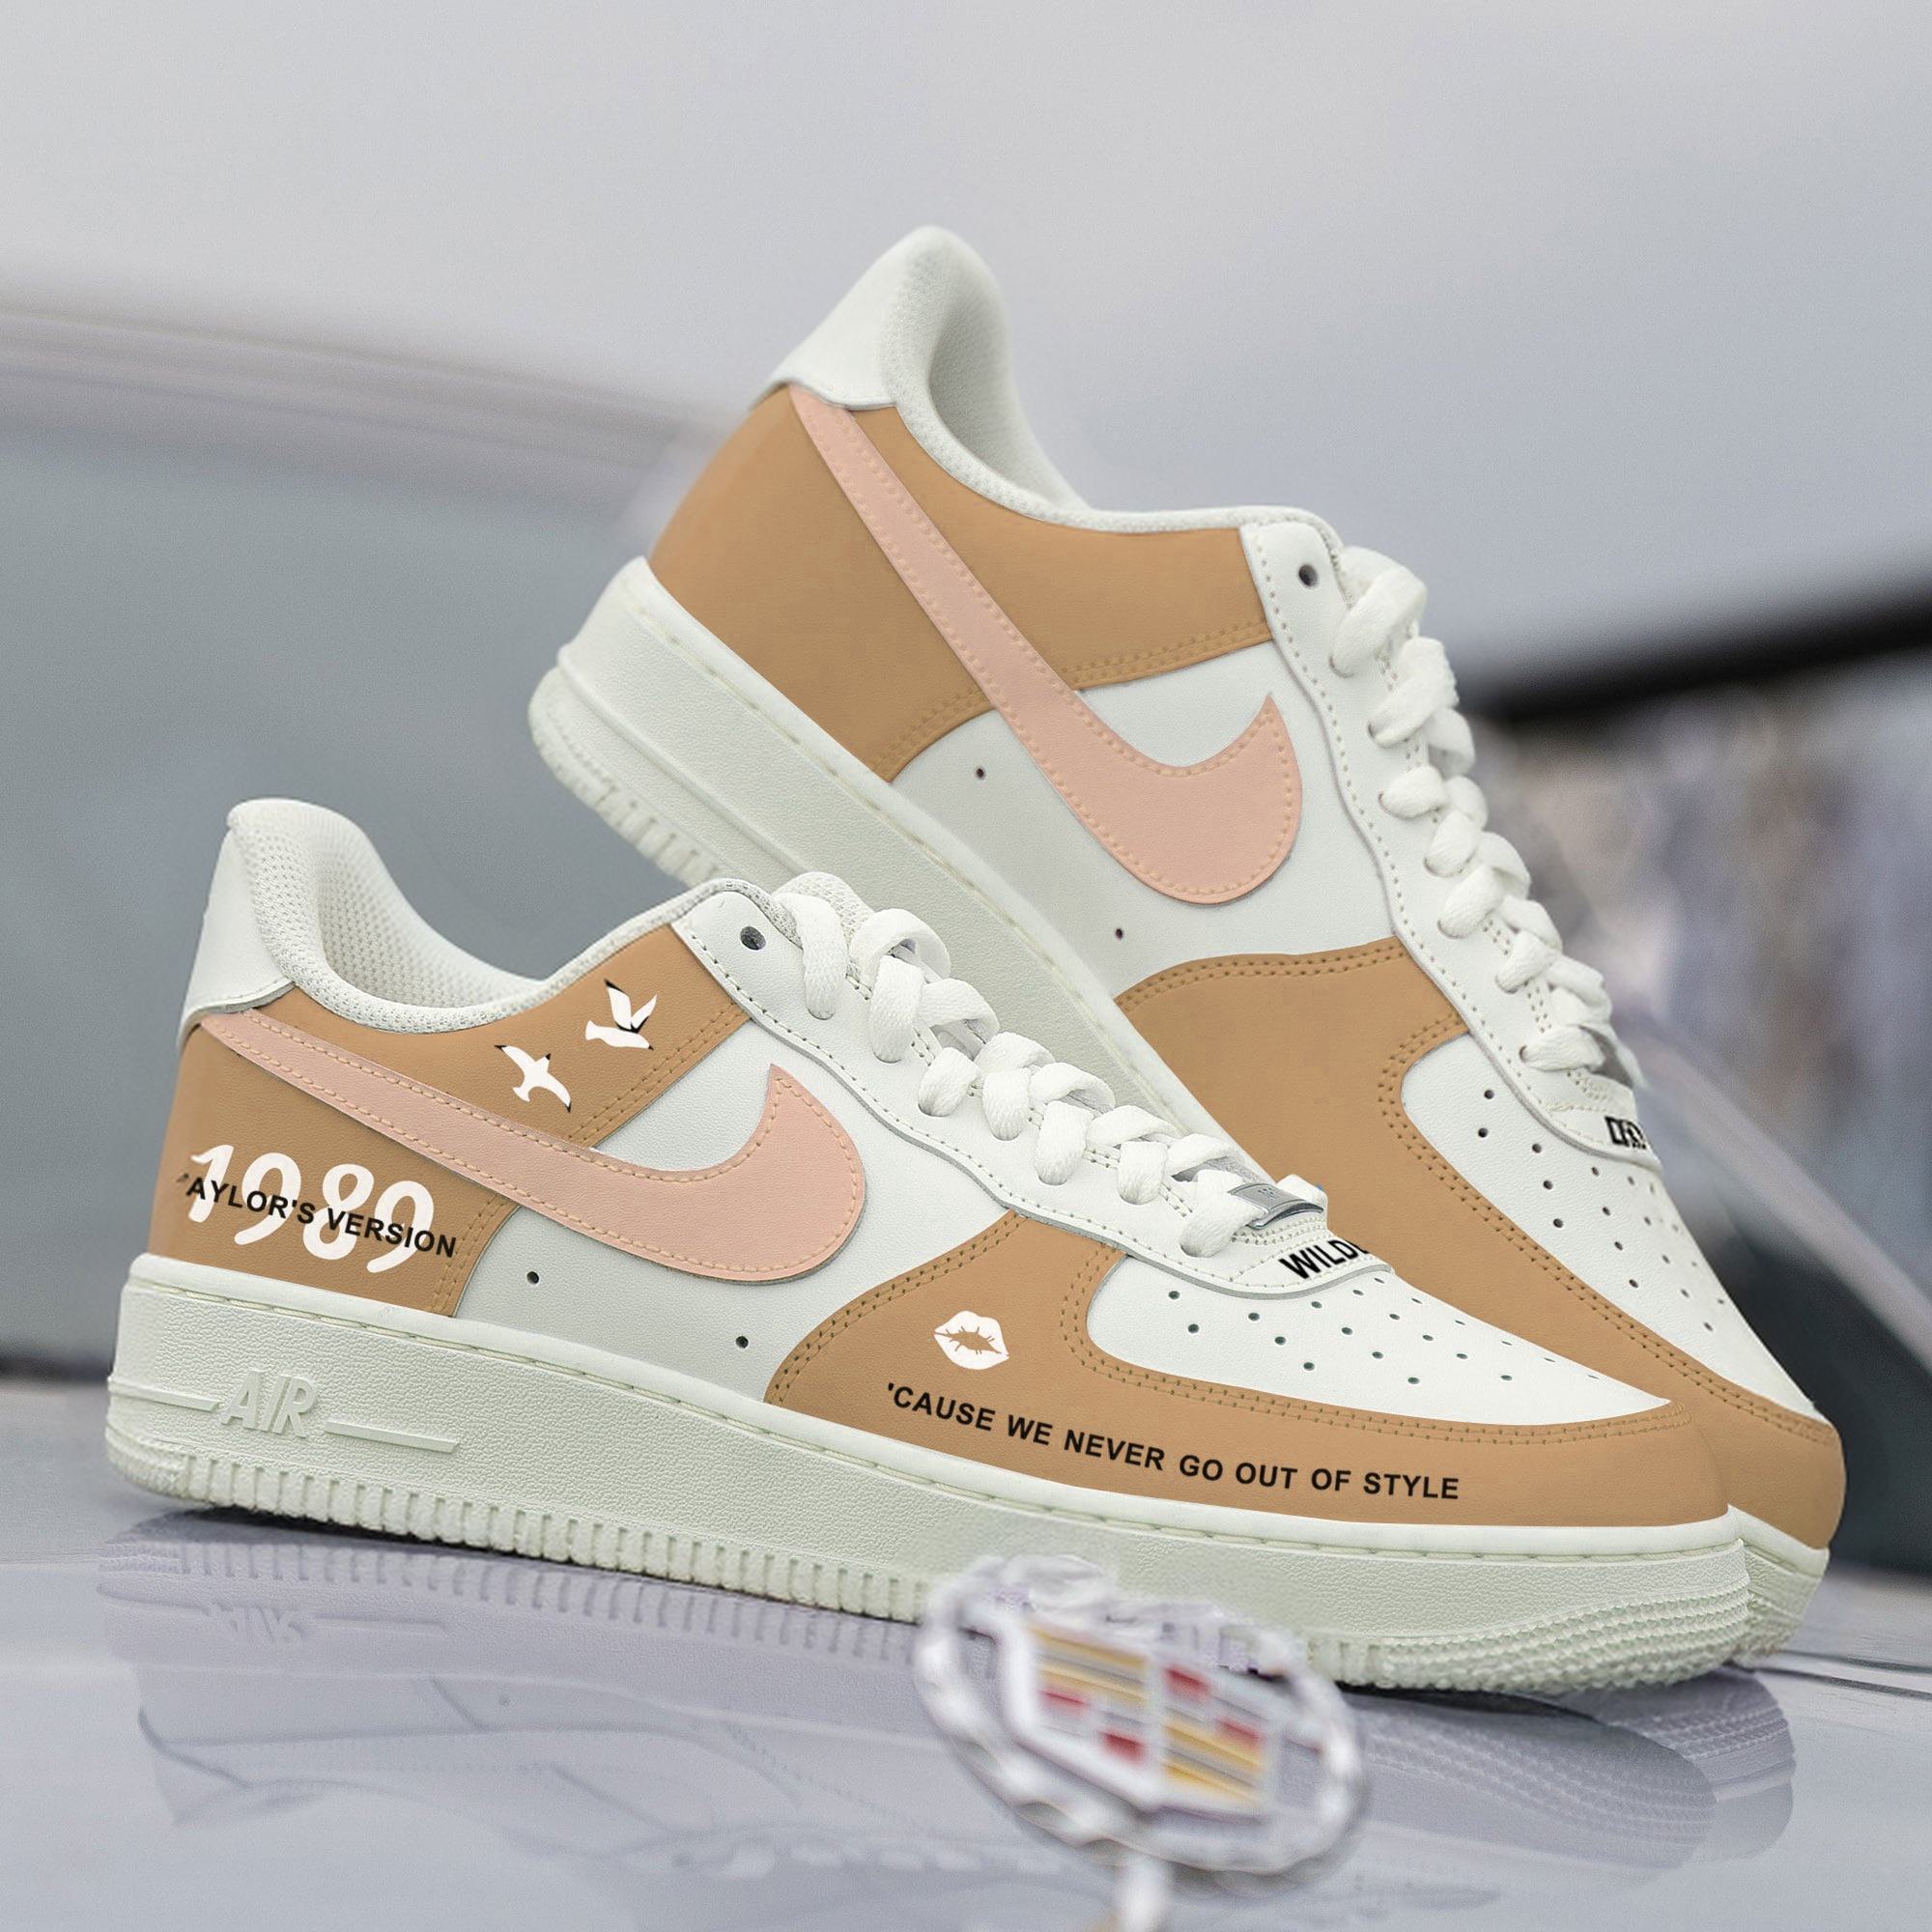 Custom Taylor's Nike Air Force 1 Shoes Beige